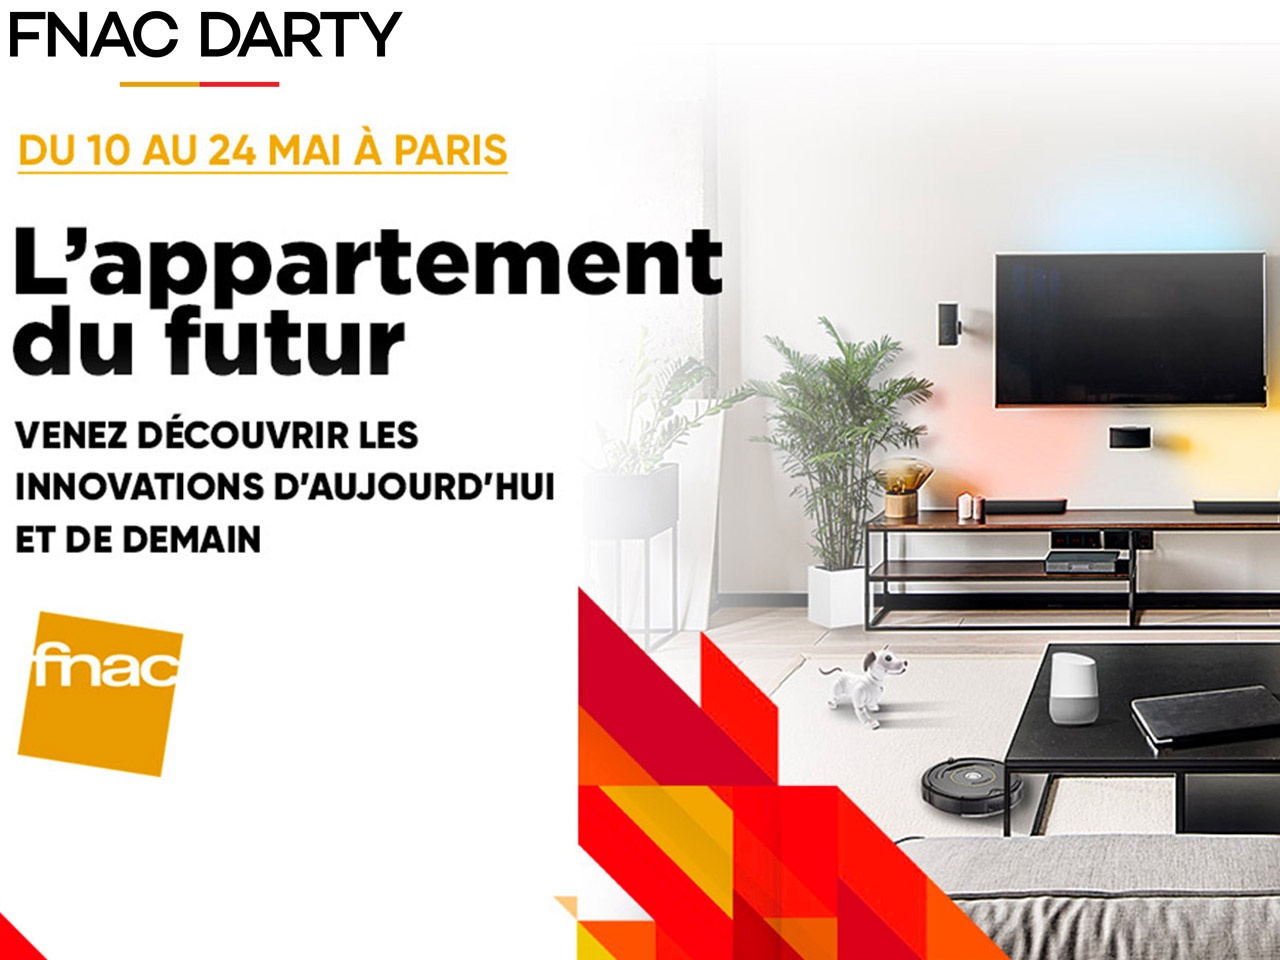 Fnac Darty lance son appartement du futur